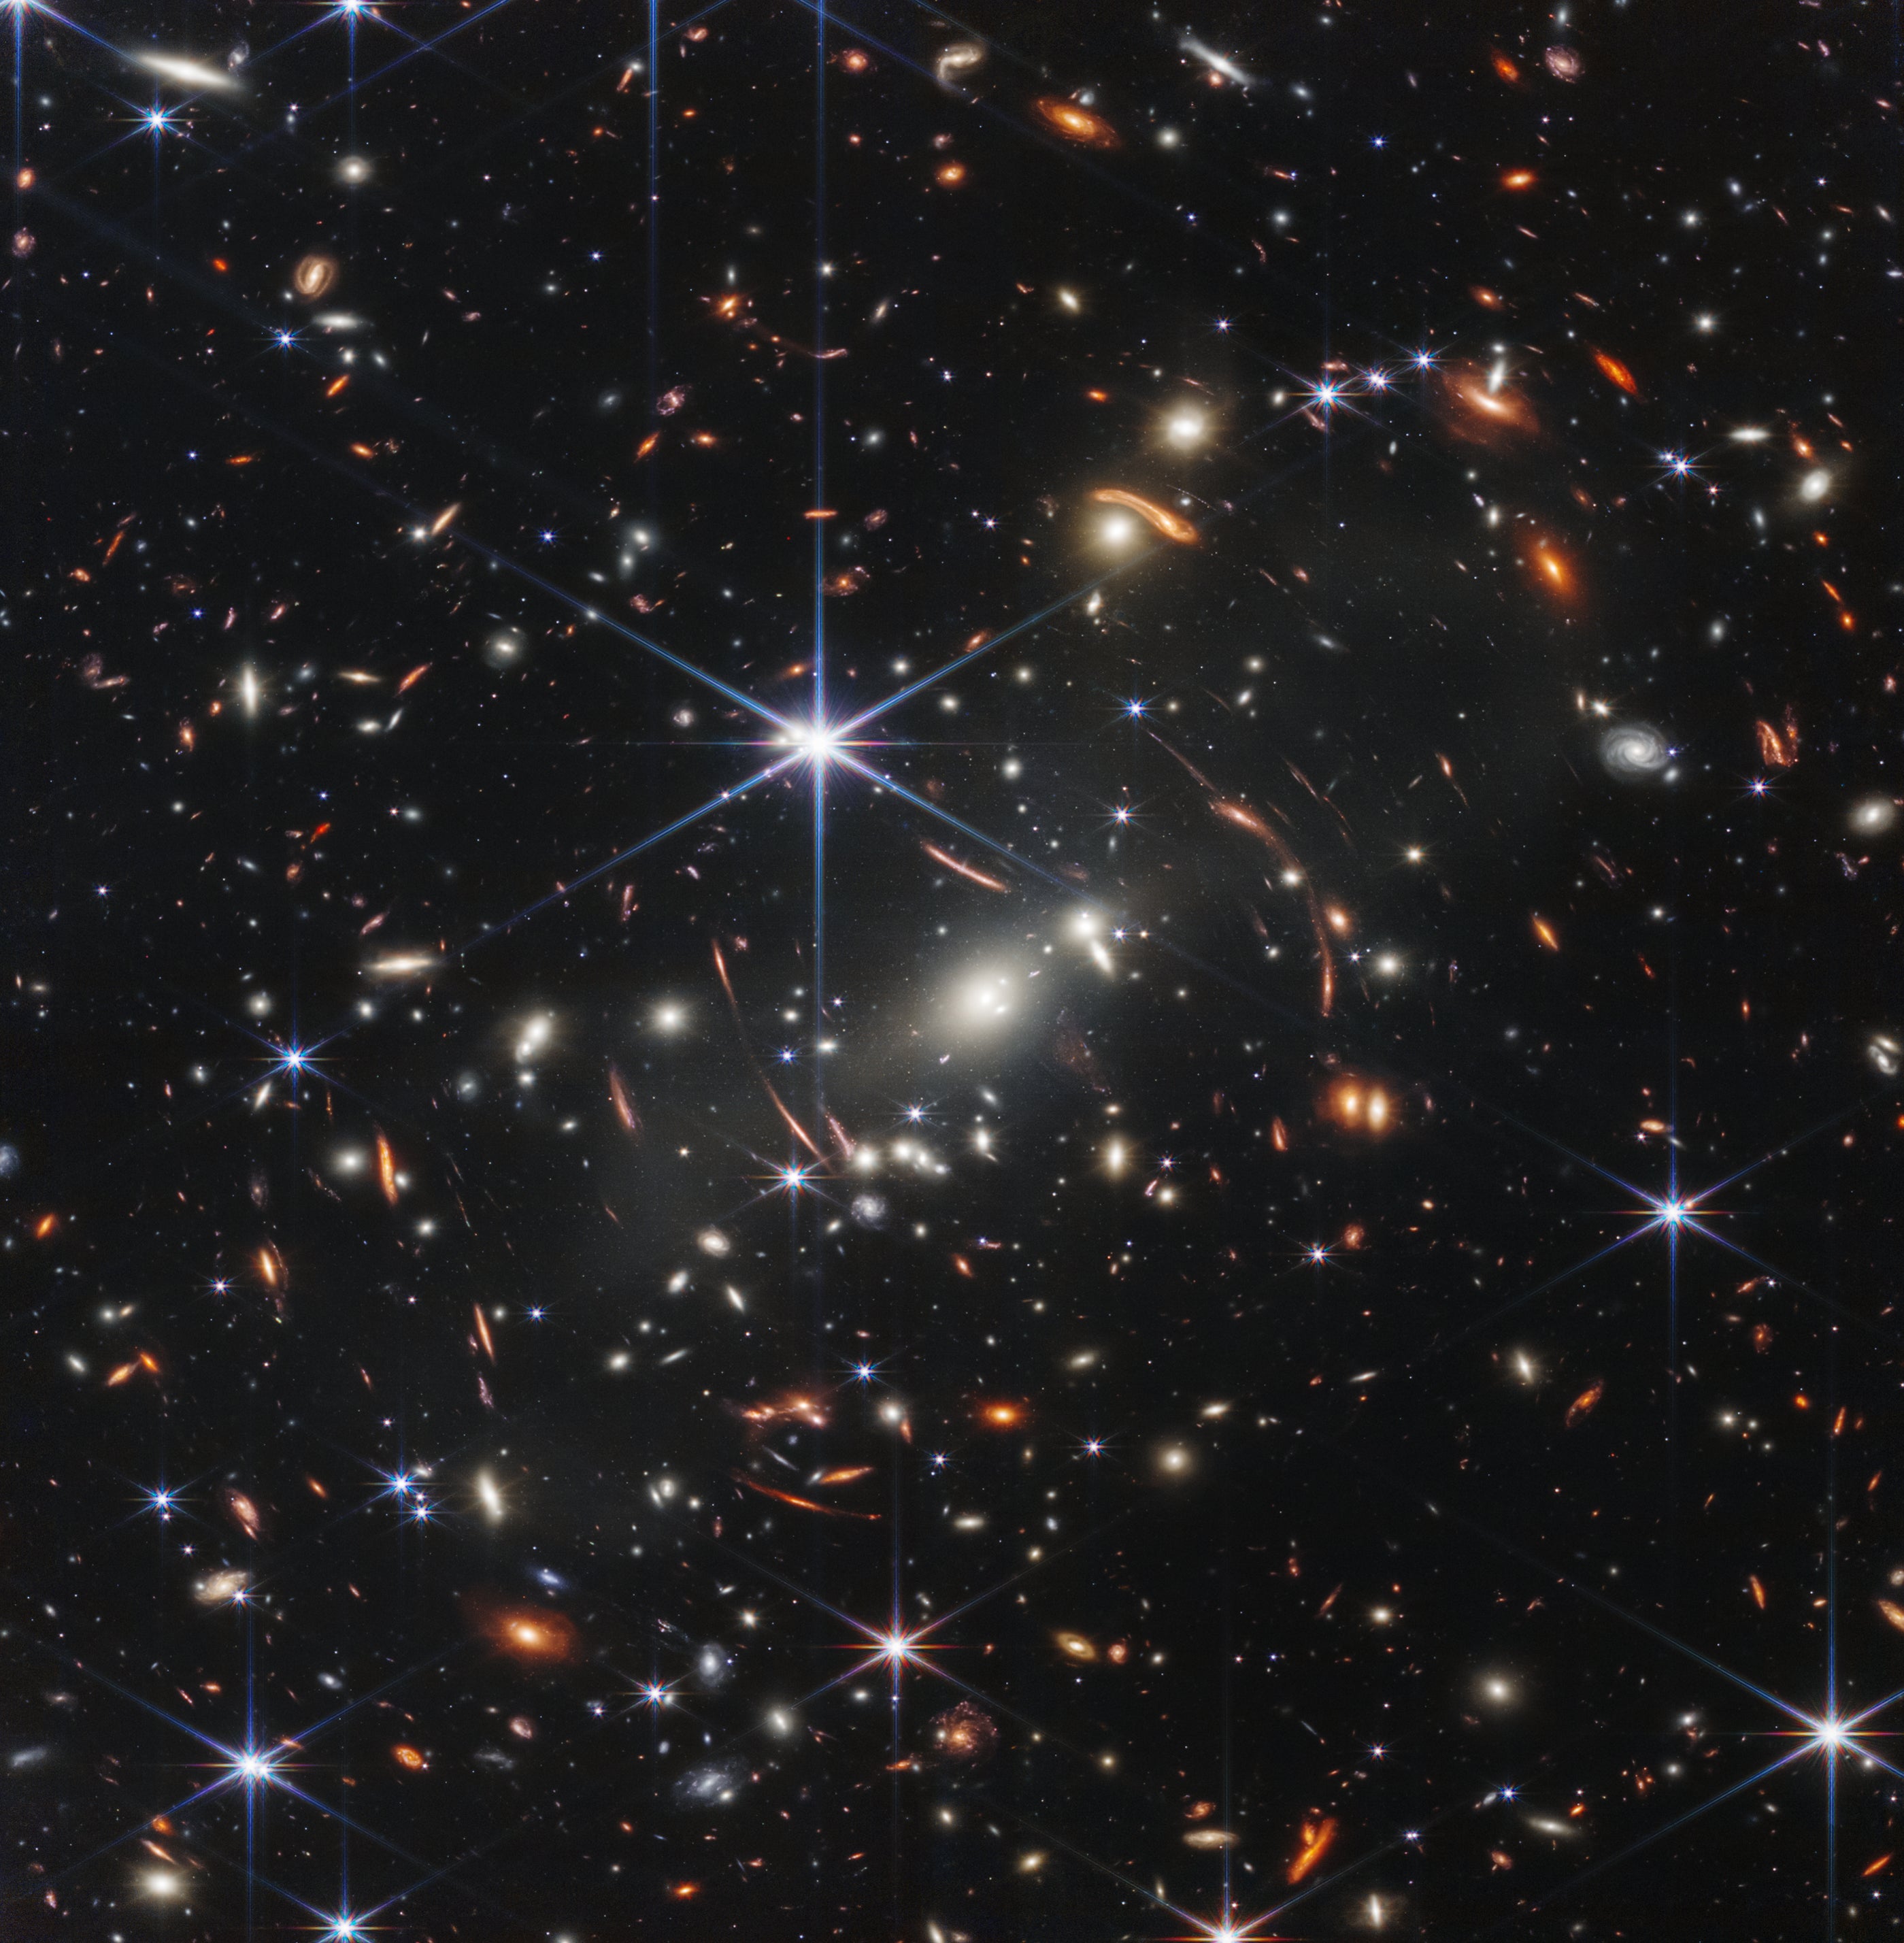 The first Webb deep field image shows galaxies as far as 13.1 billion light years away